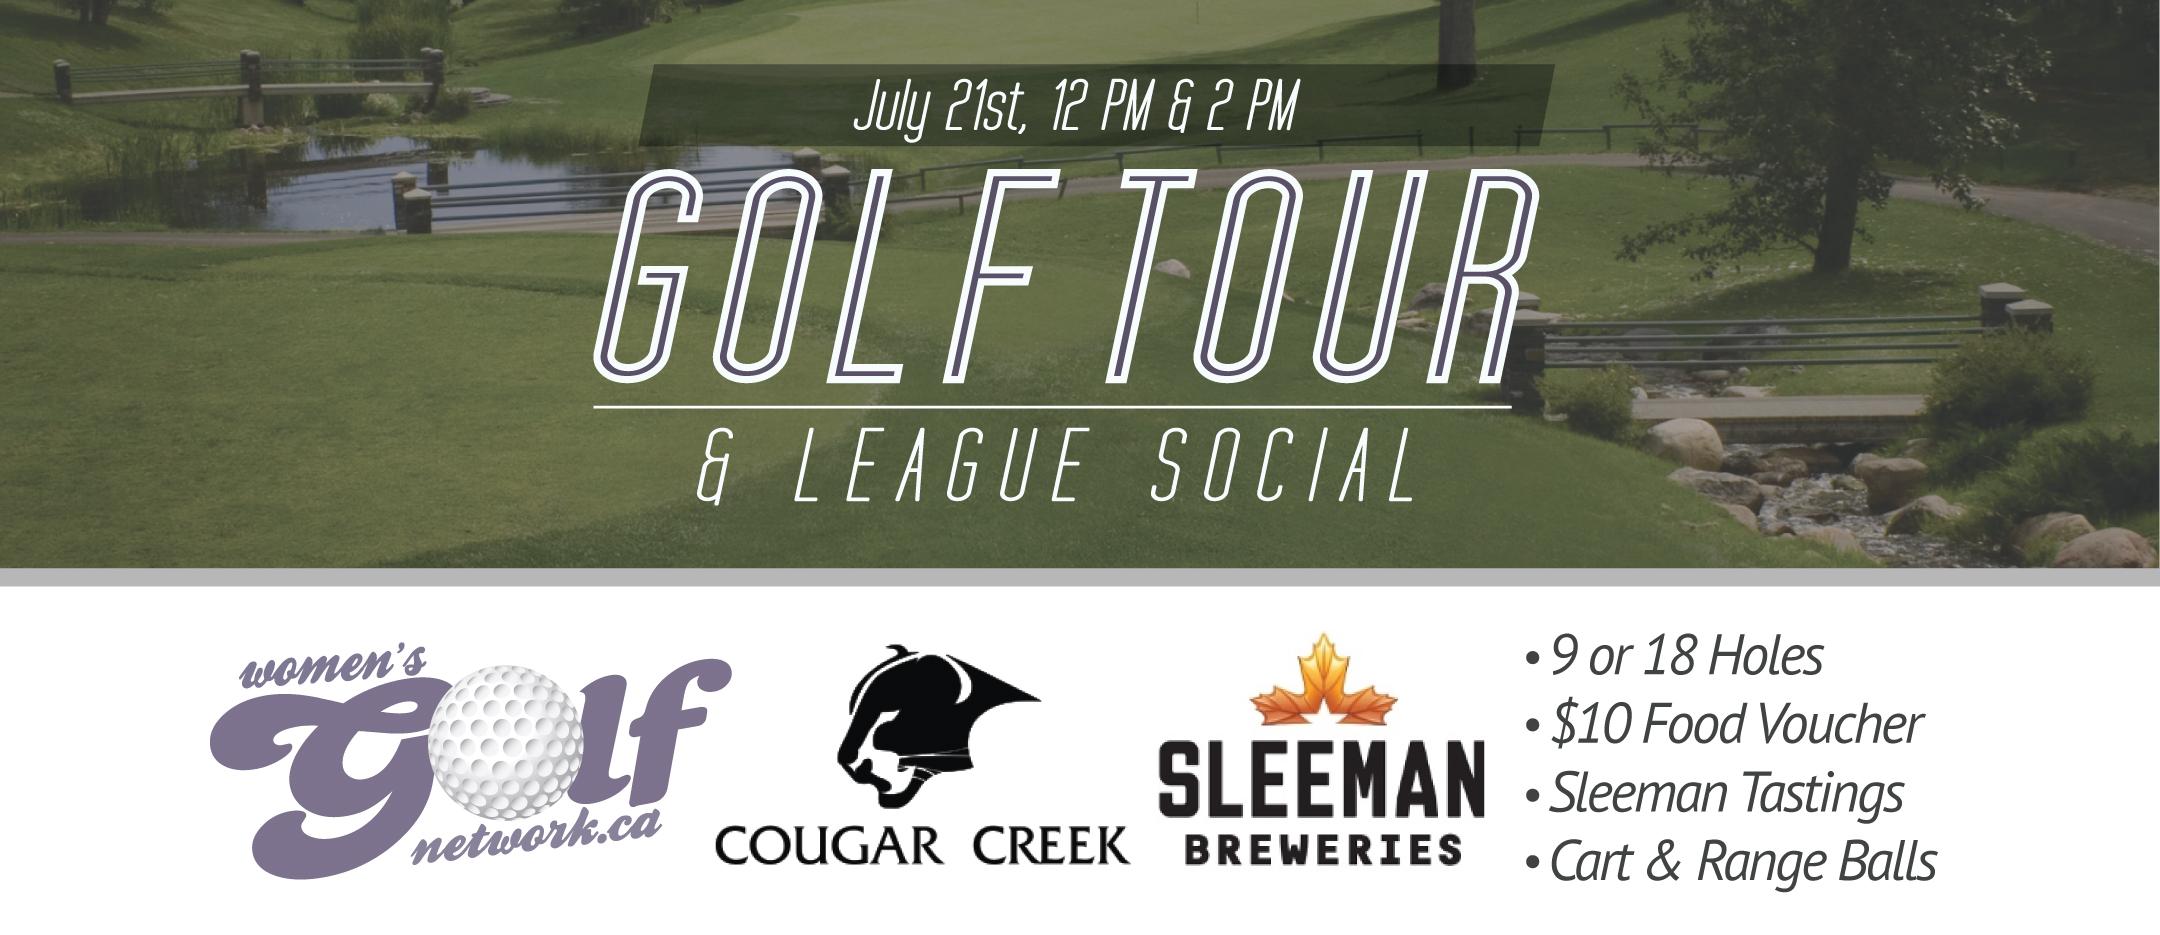 Cougar Creek Golf Tour - Edmonton Women's Golf